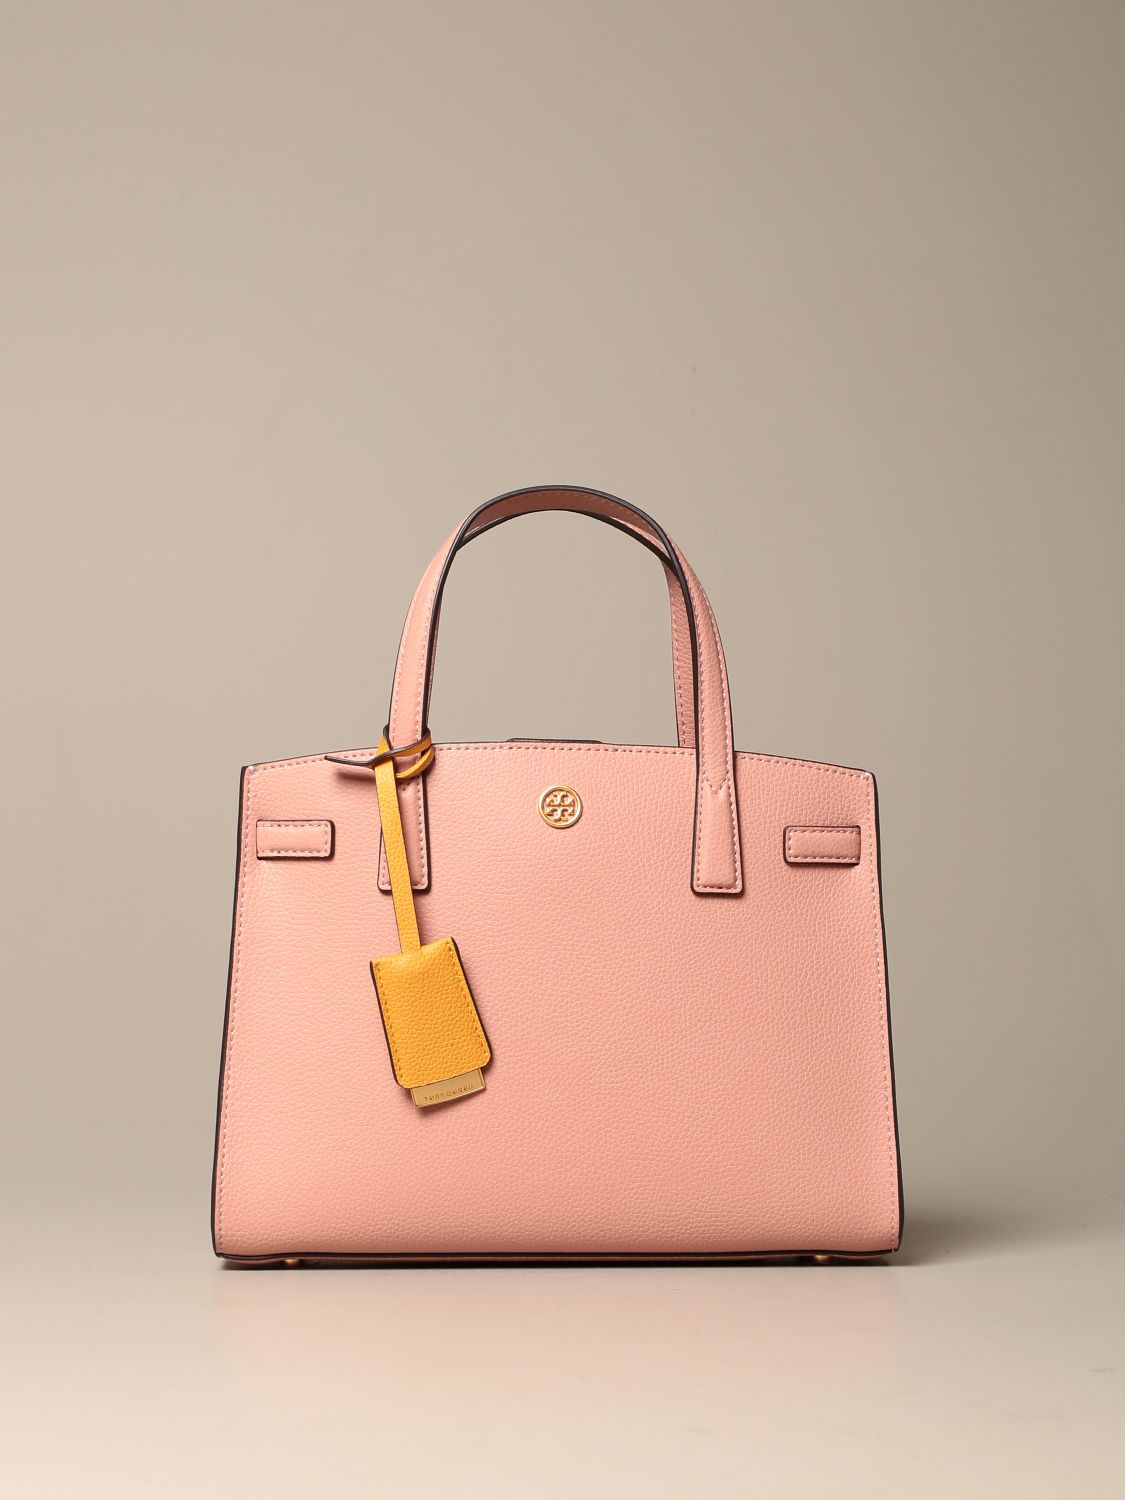 TORY BURCH: handbag for women - Pink | Tory Burch handbag 73625 online on  